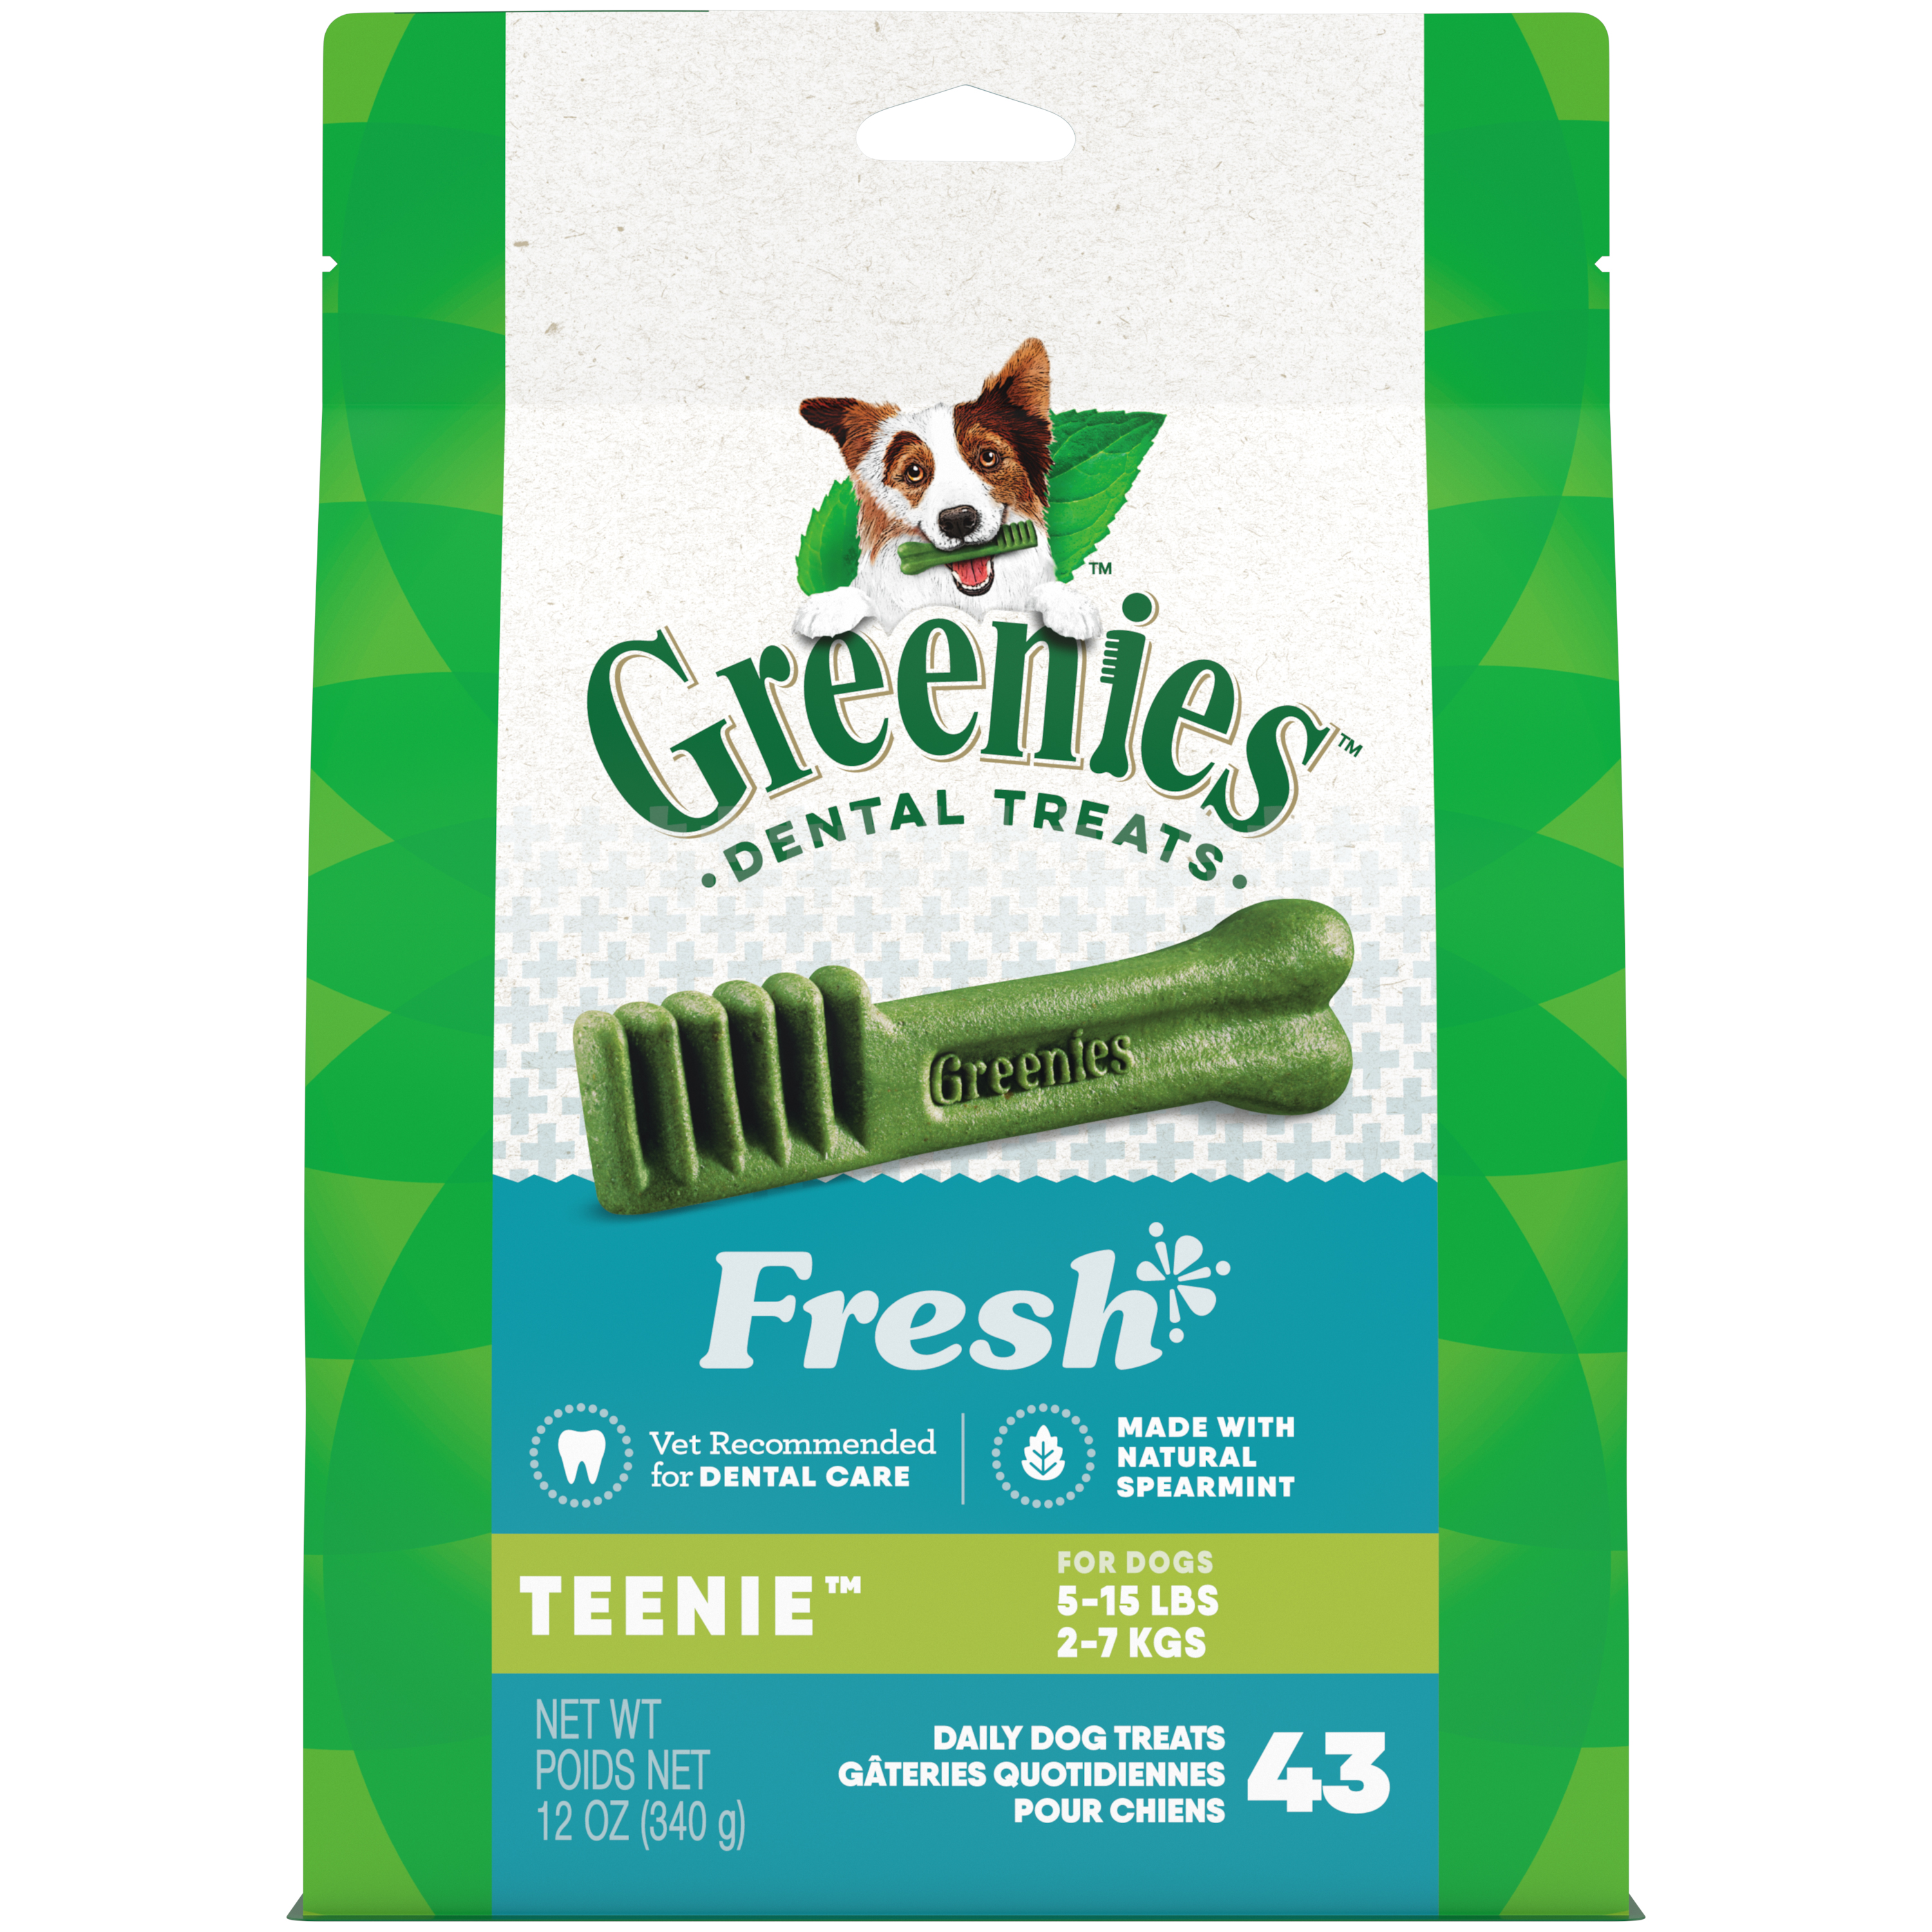 12 oz. Greenies Teenie Fresh Treat Pack - Health/First Aid